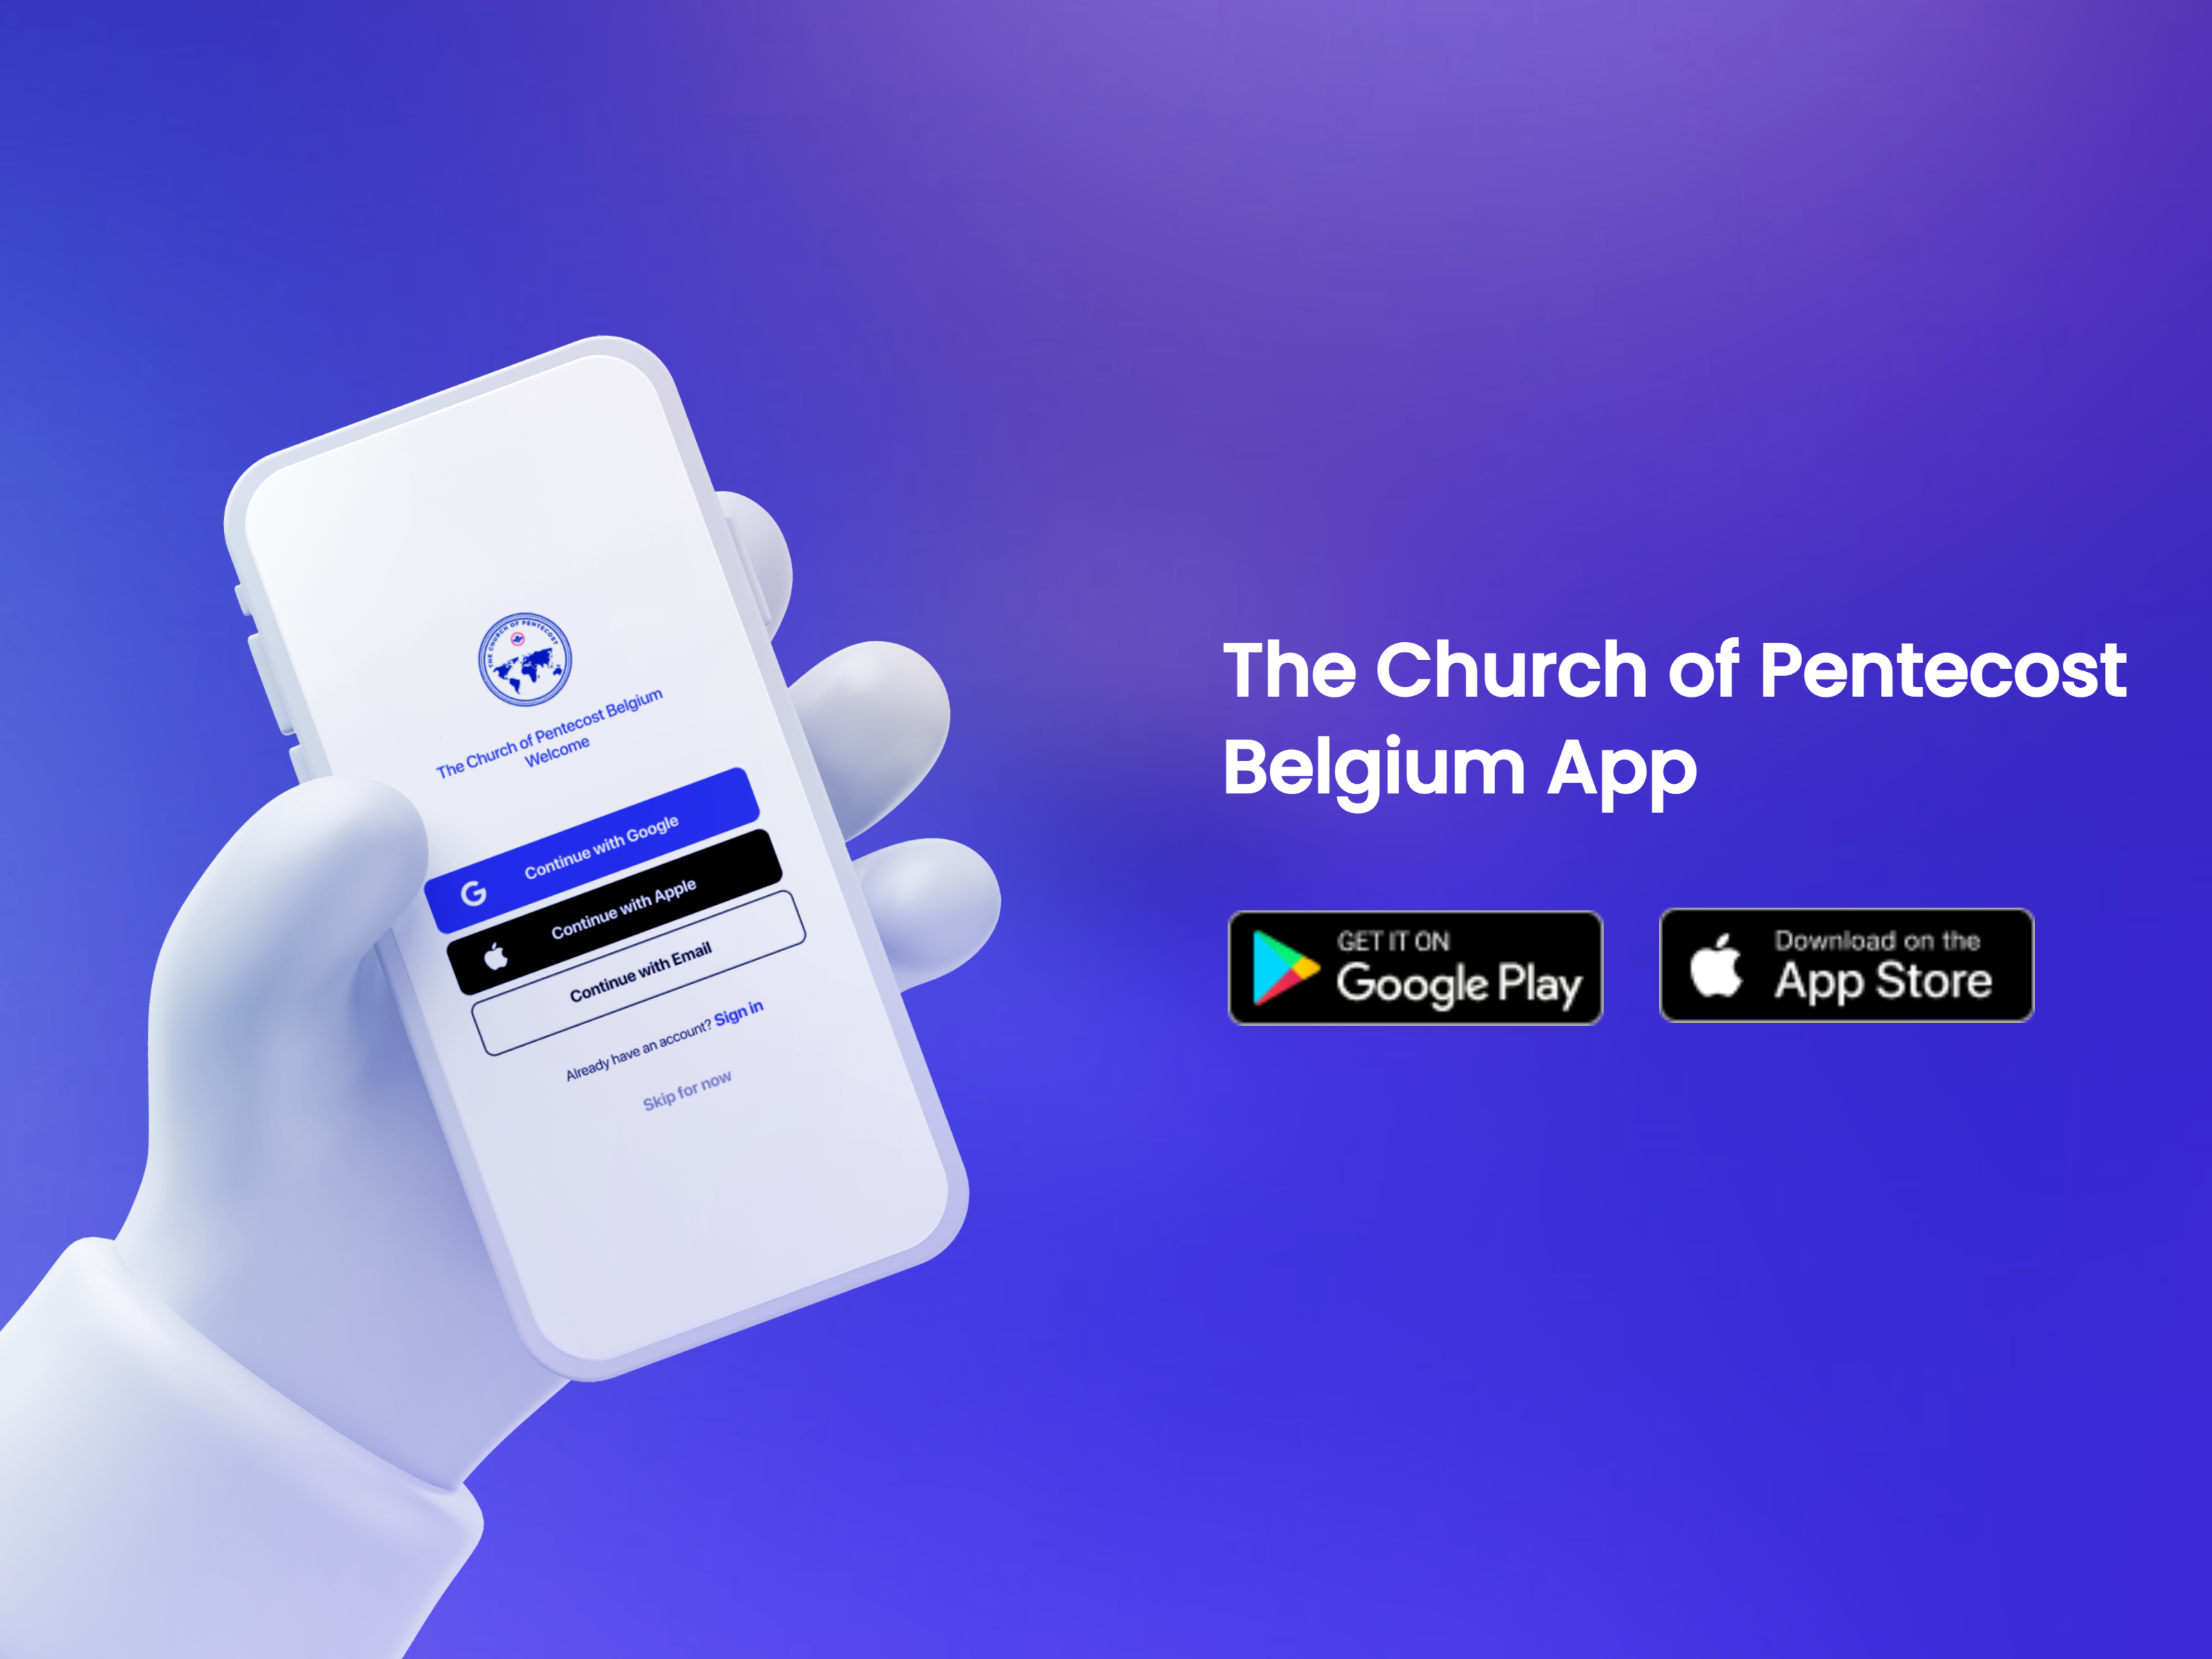 The Church of Pentecost Belgium App